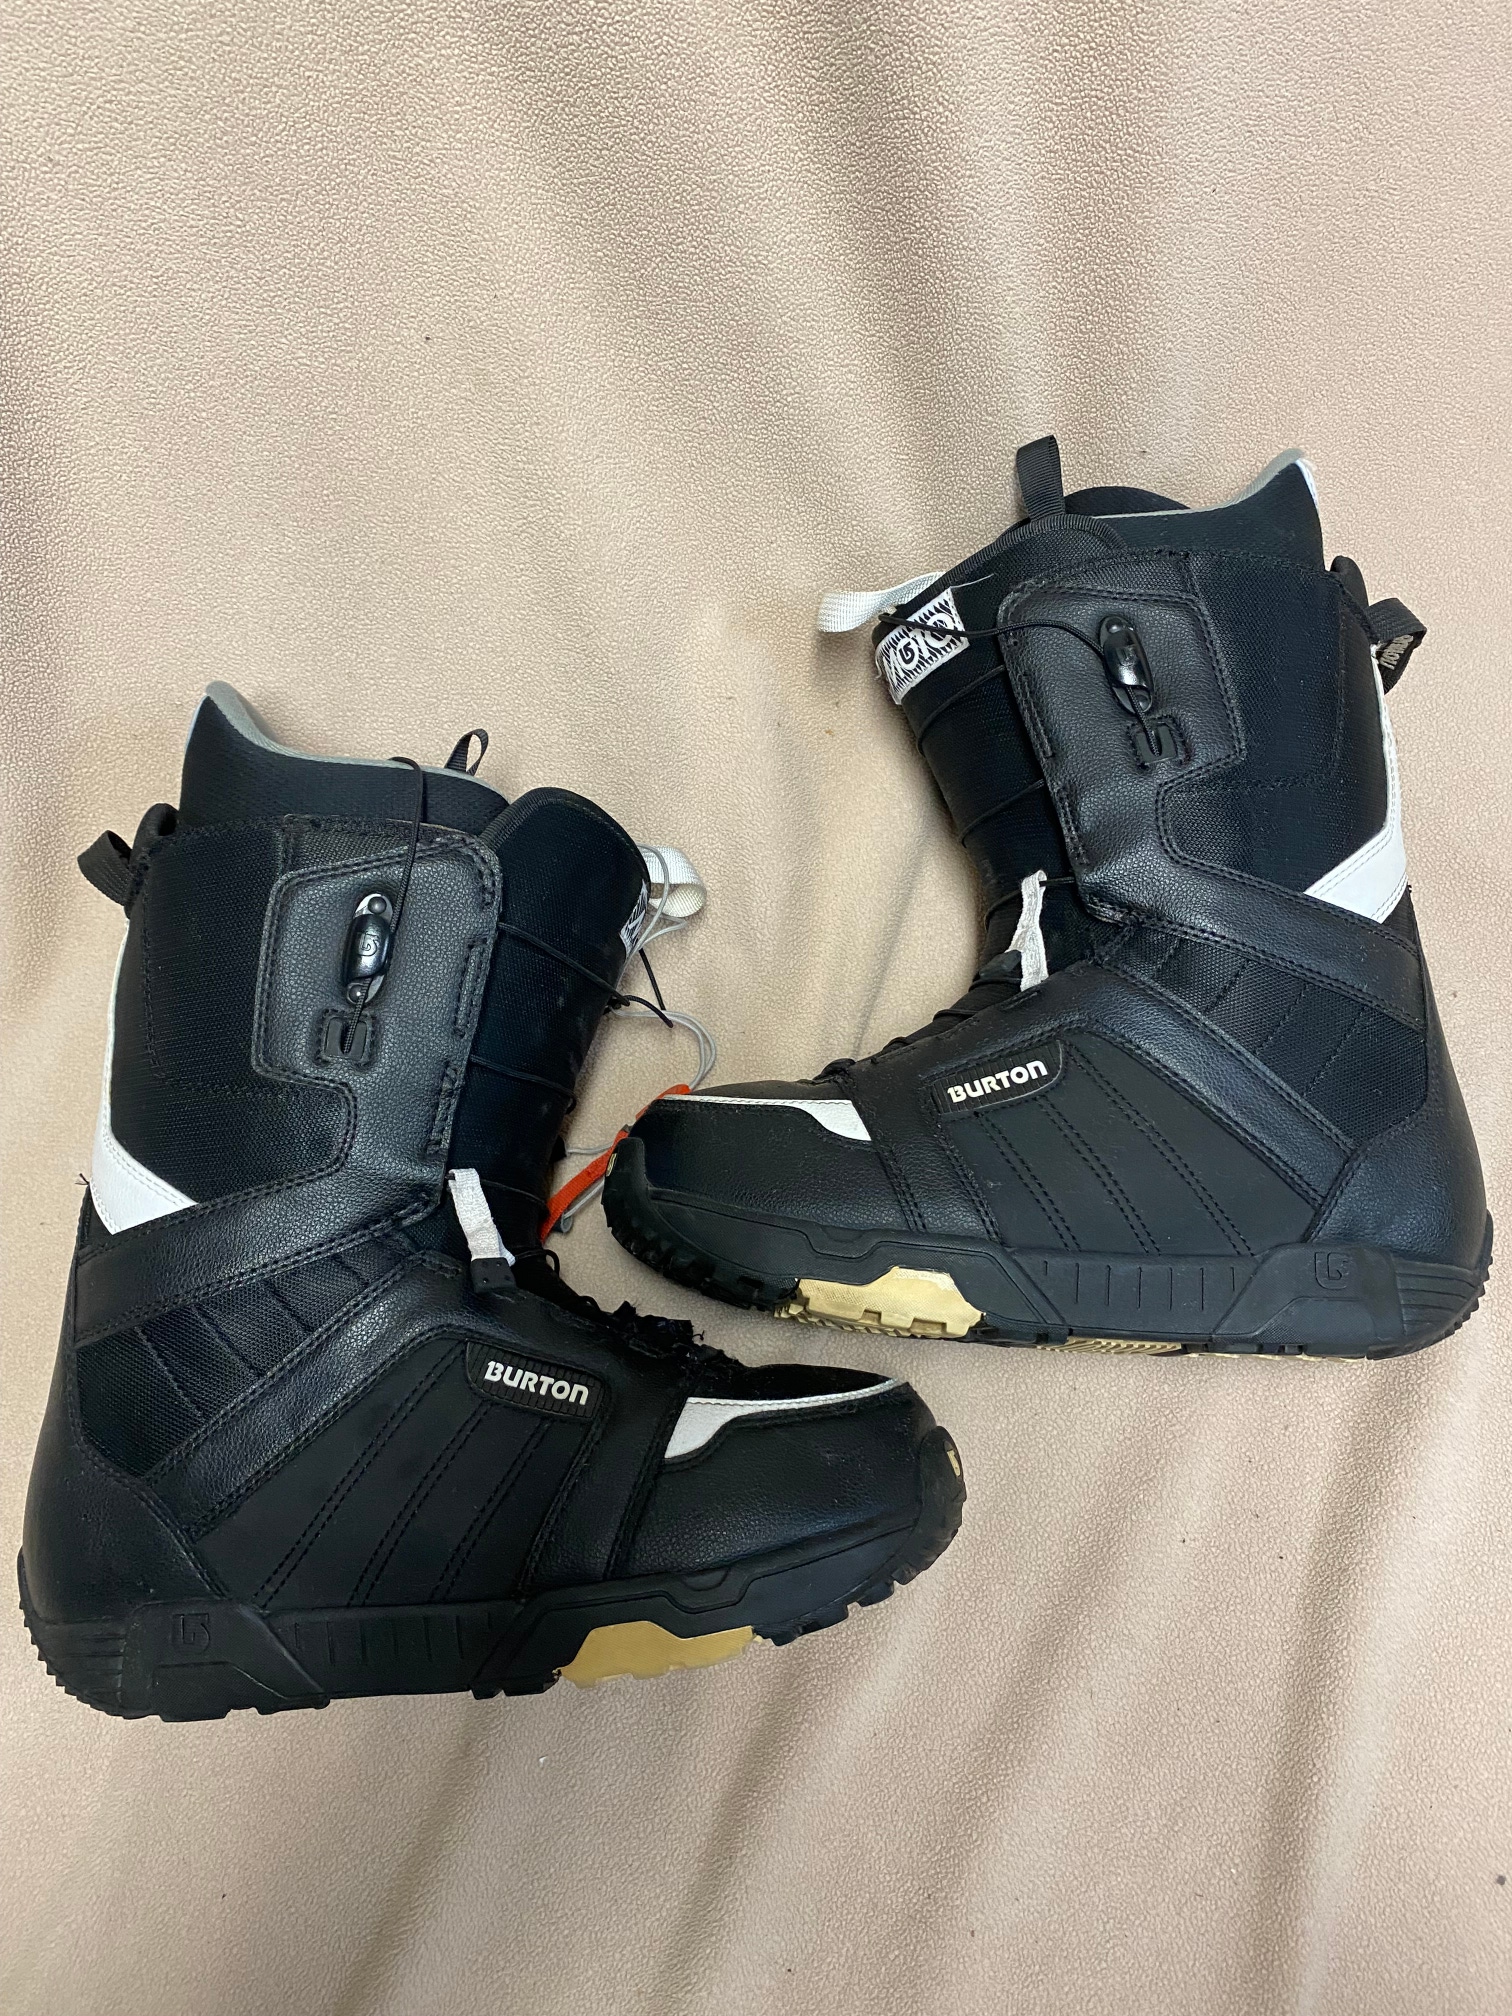 Men's Used Size 11 (Women's 12) Burton Imprint 1 Snowboard Boots